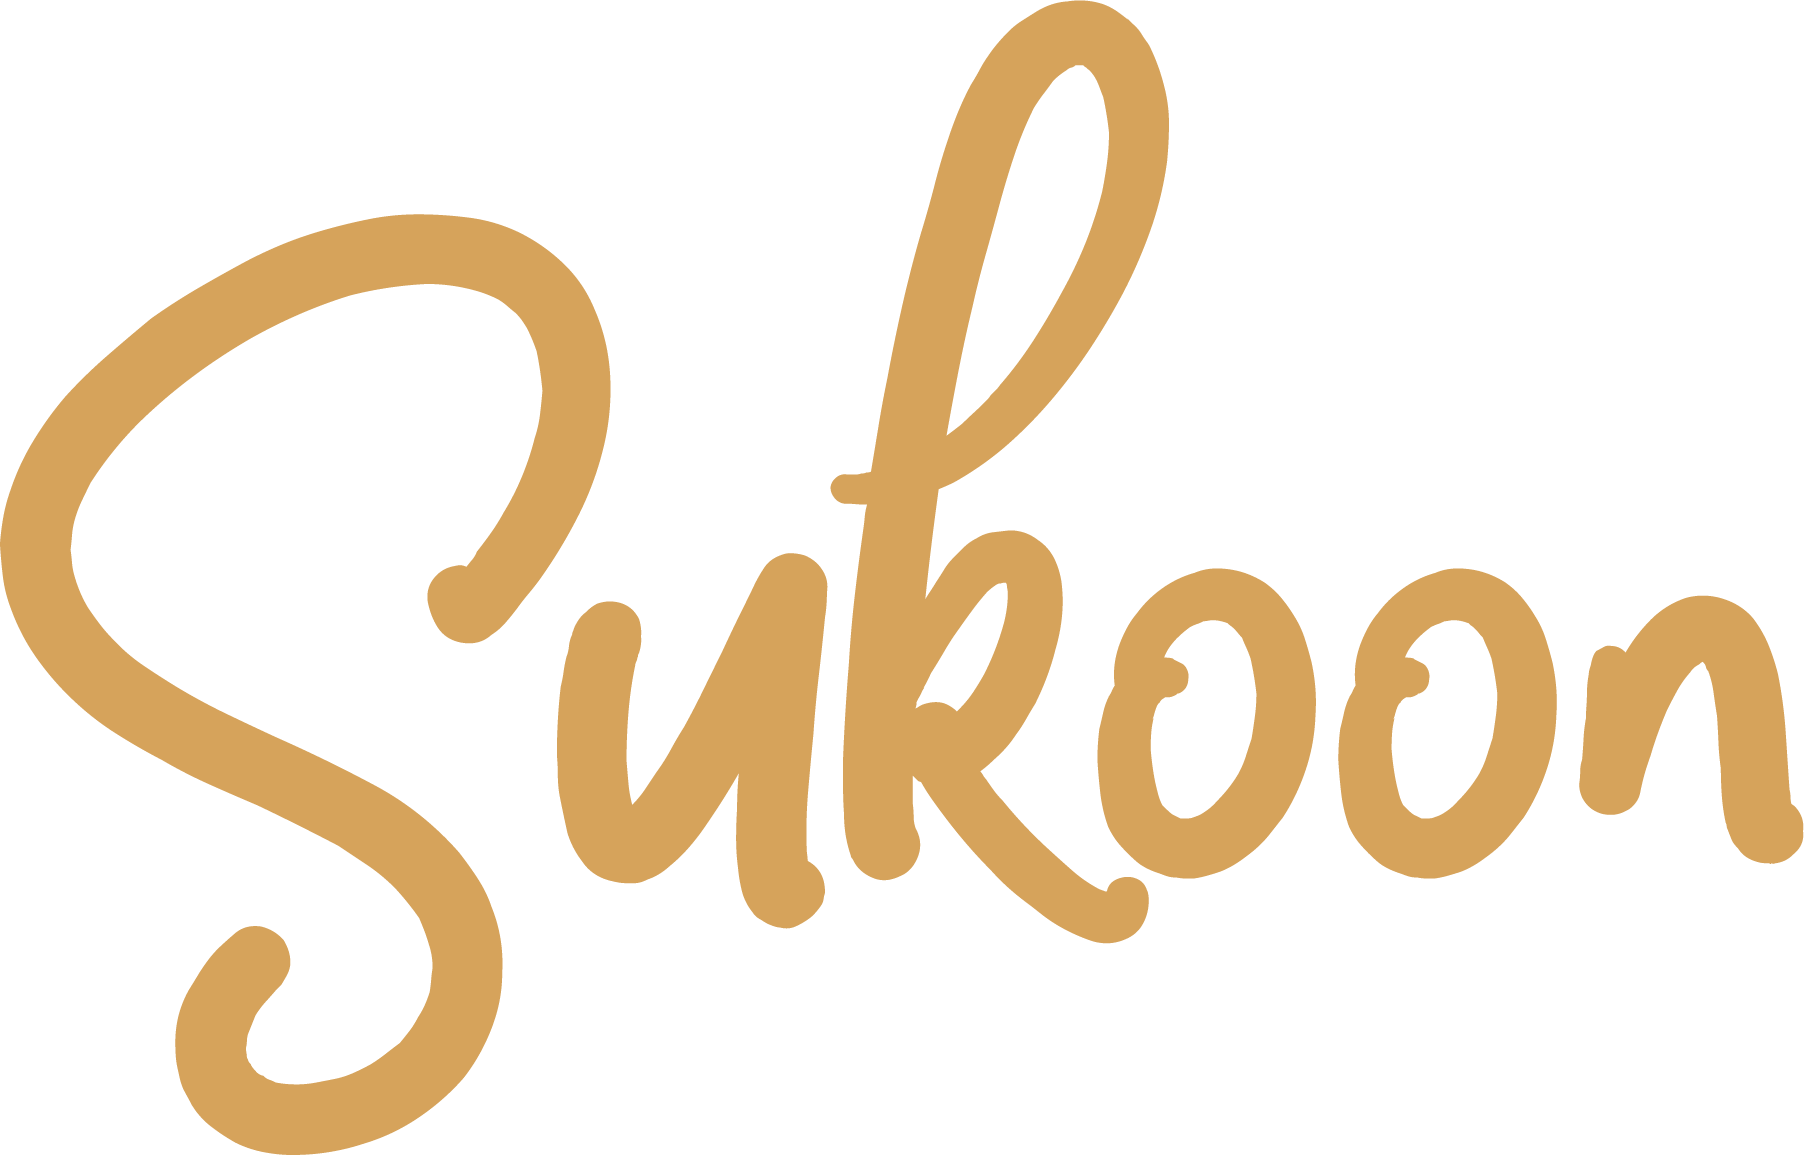 SUKOON - Sukoon LLC Trademark Registration